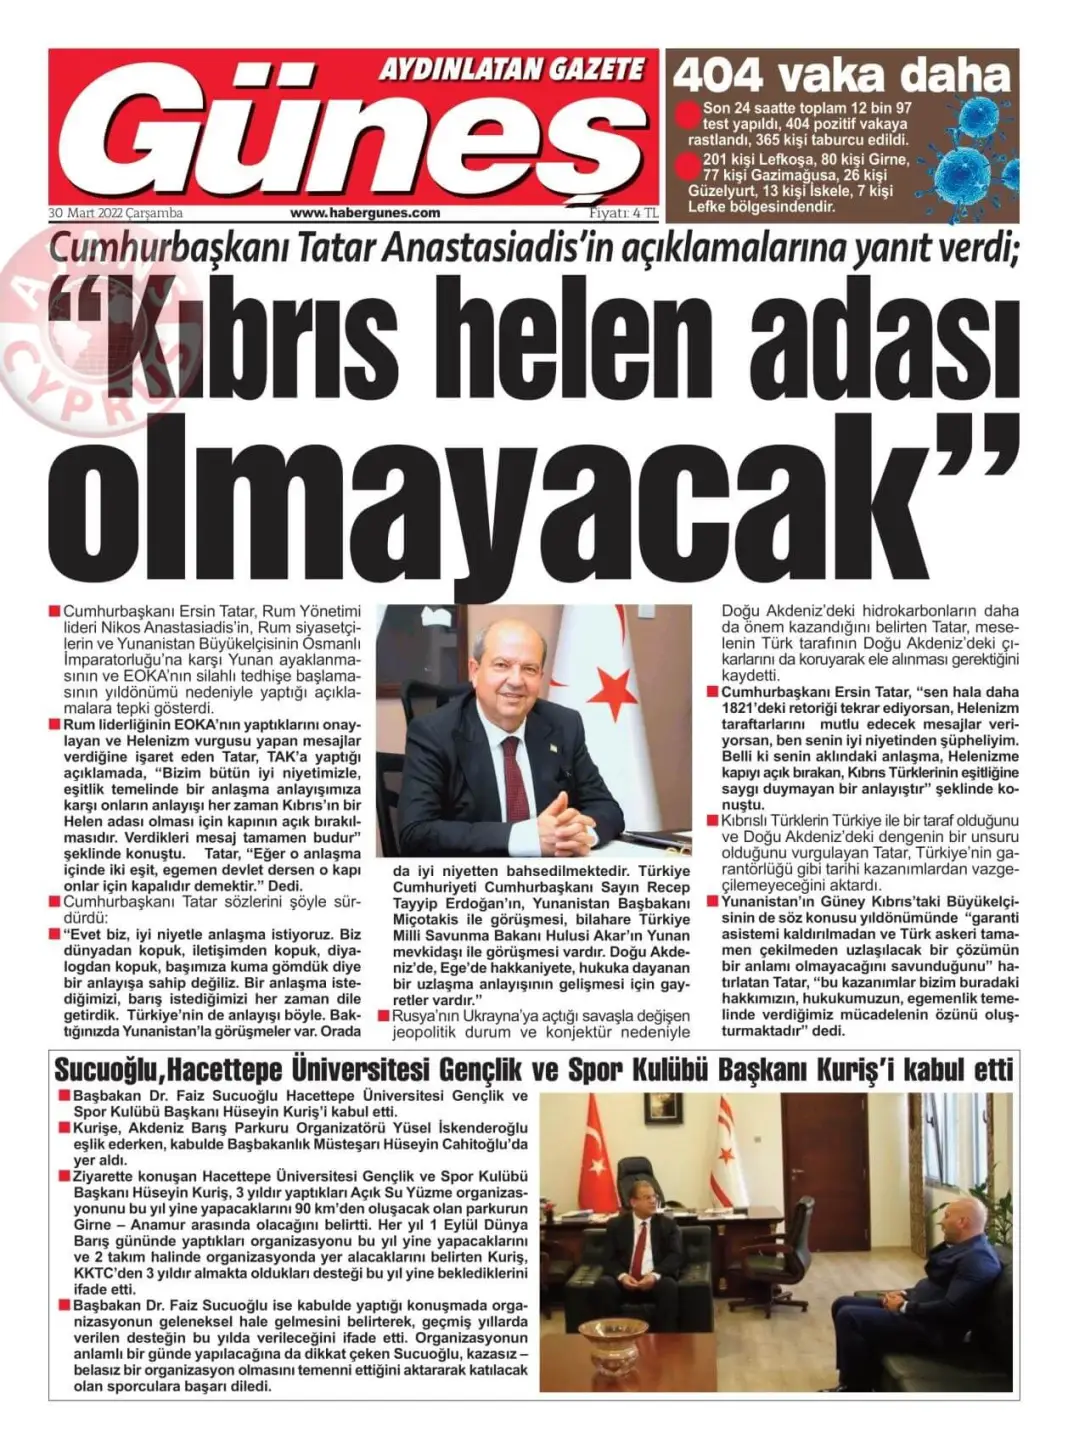 30 Mart 2022 Çarşamba Gazete Manşetleri 12